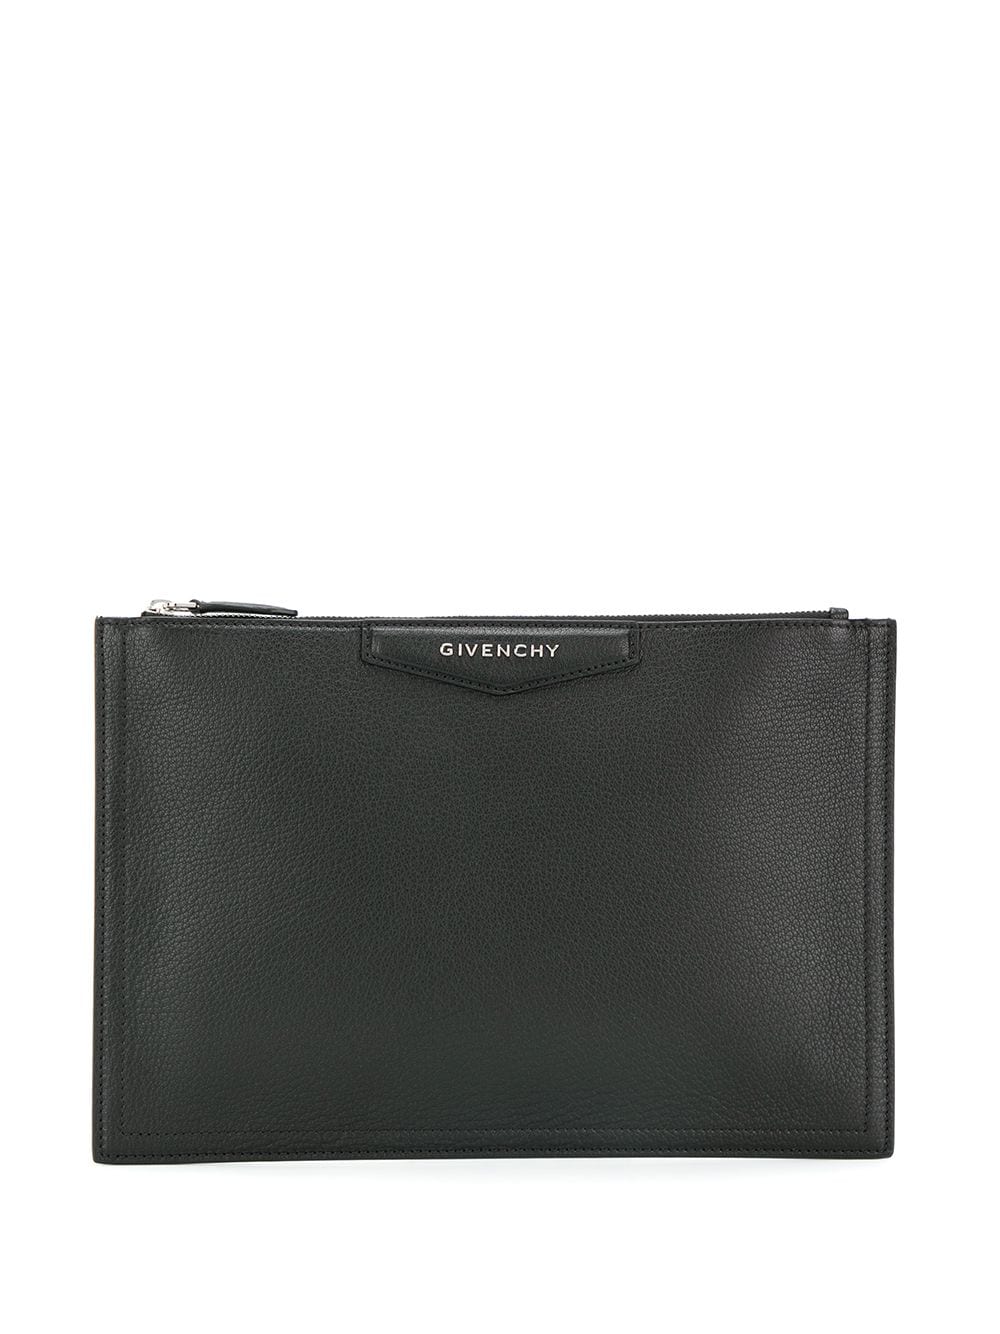 фото Givenchy клатч с металлическим логотипом